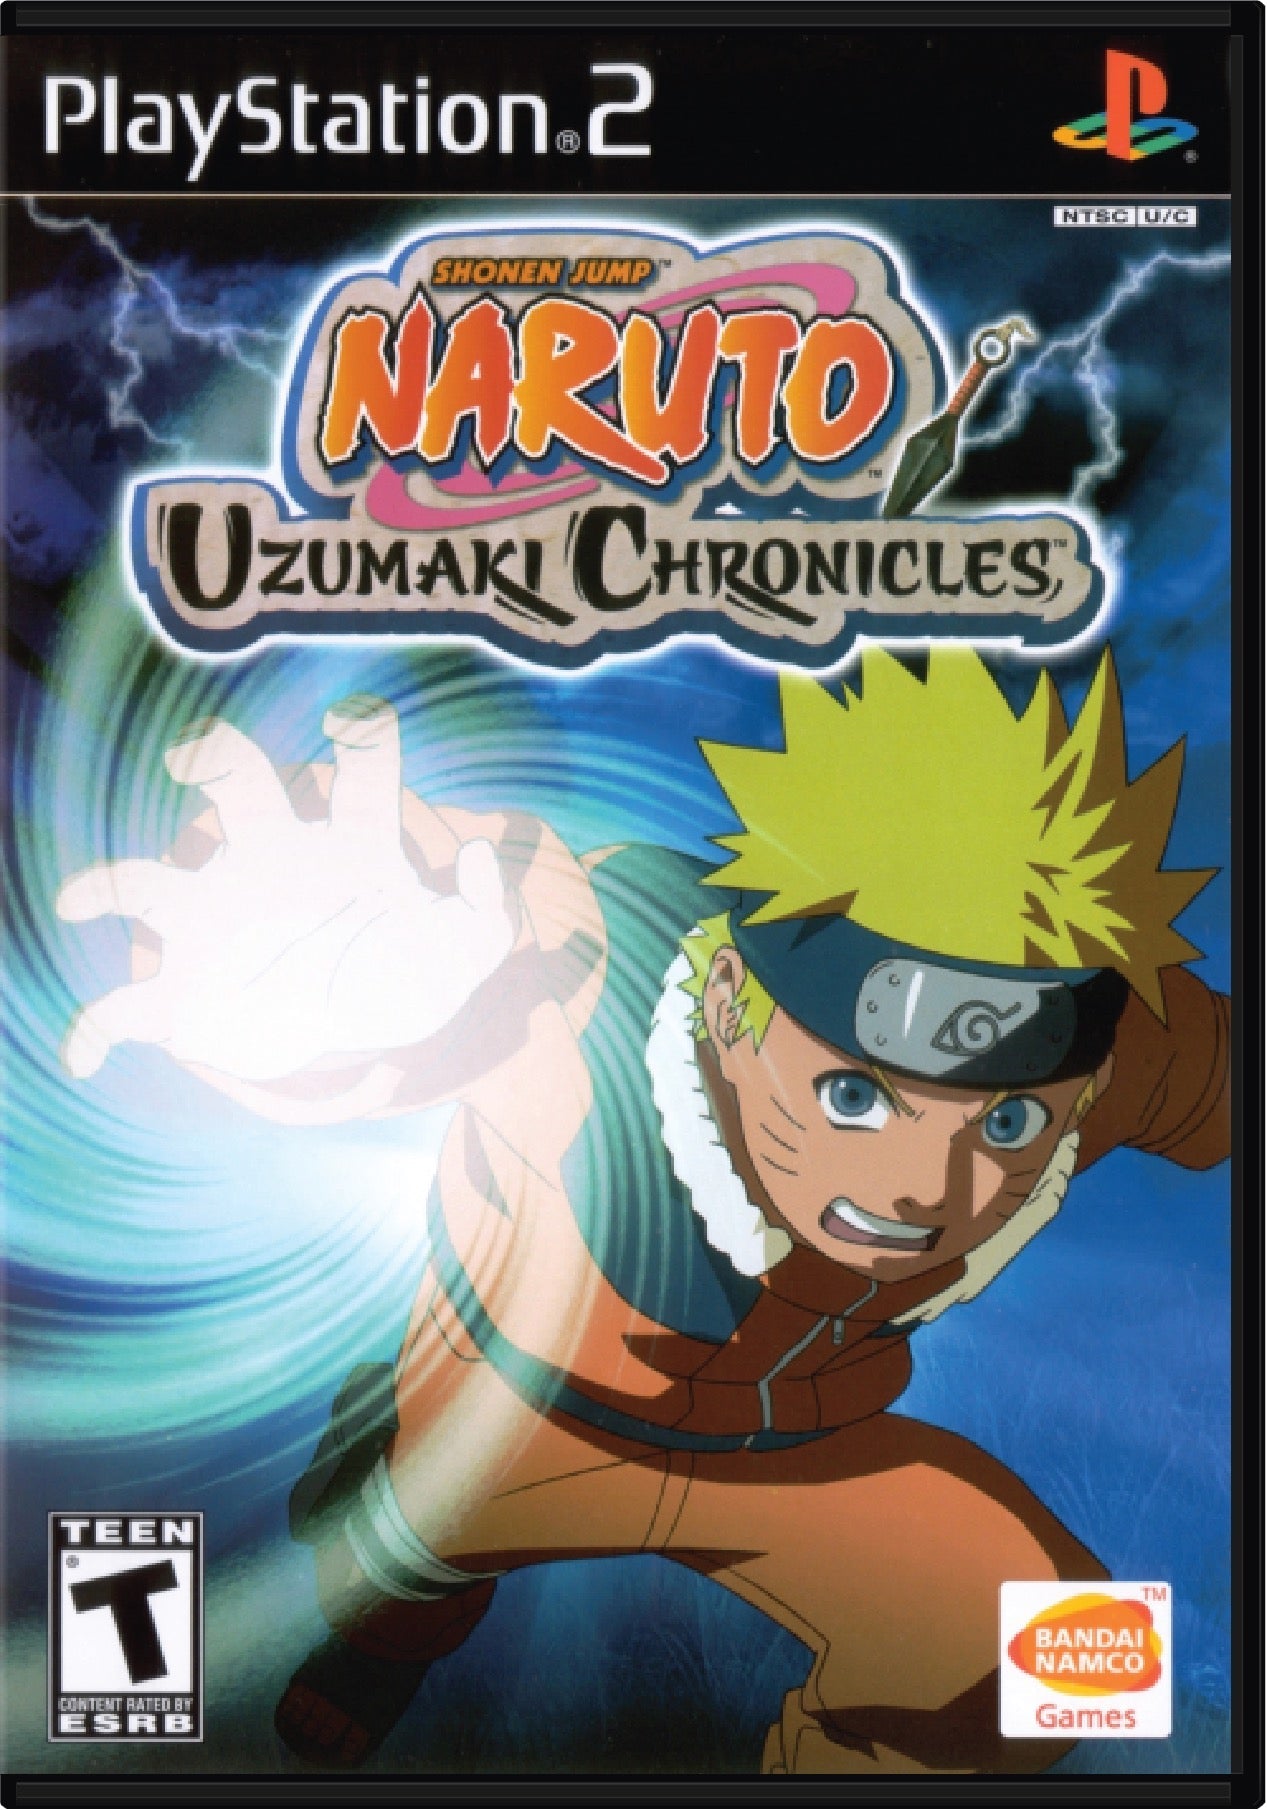 Naruto Uzumaki Chronicles Cover Art and Product Photo